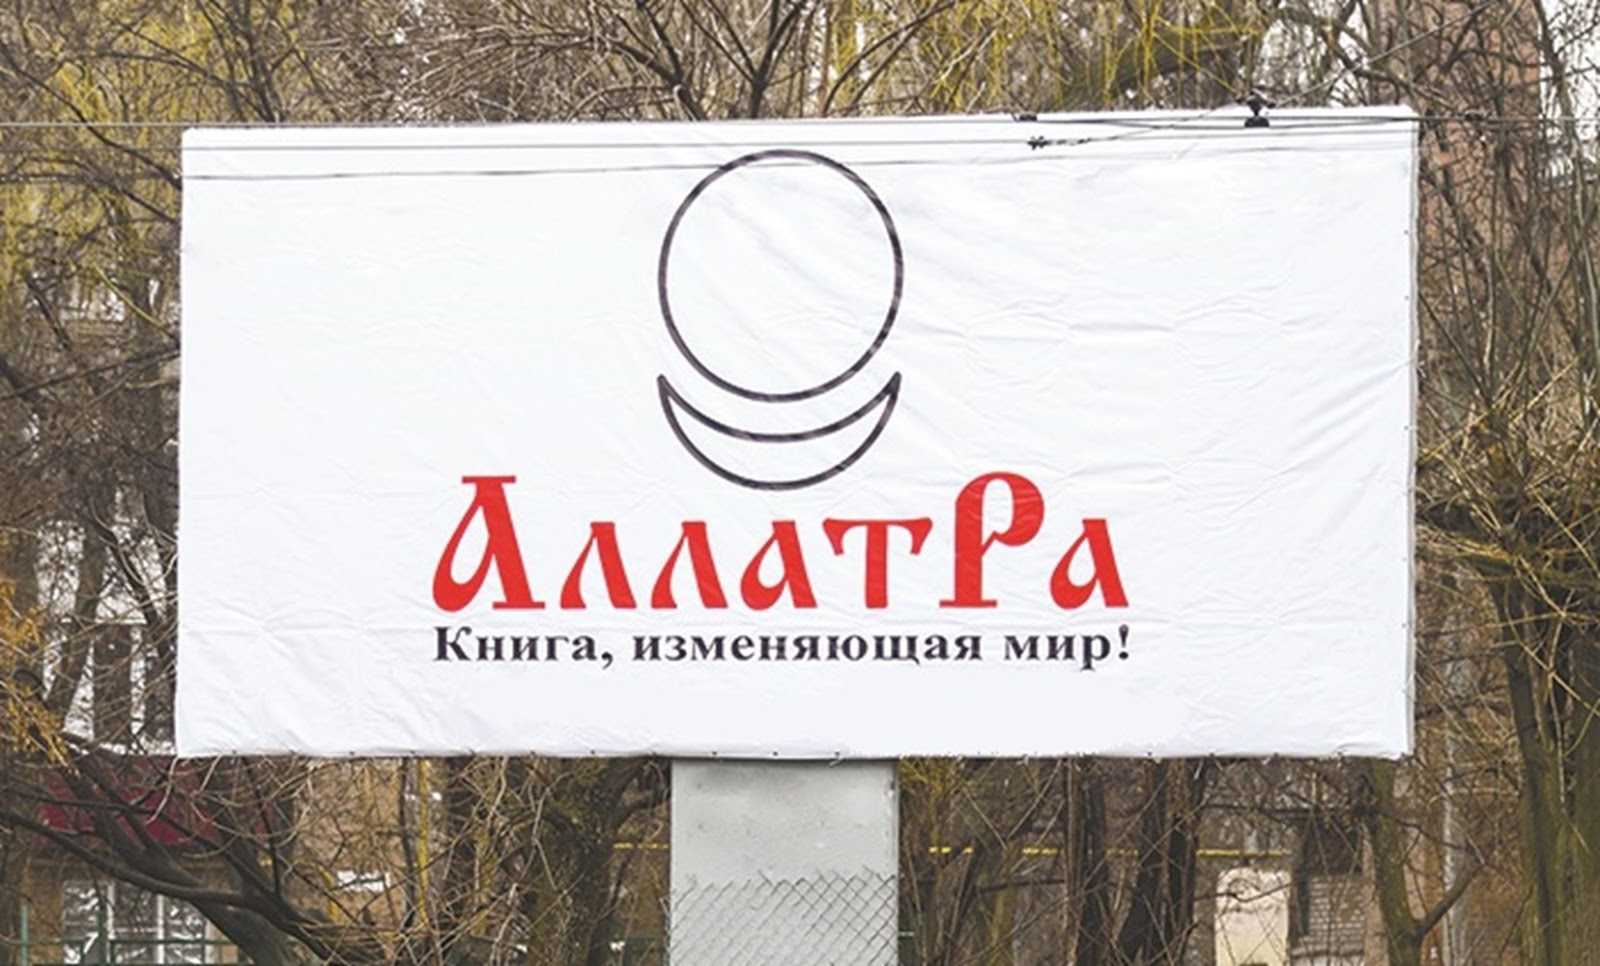 Ще зовсім недавно головна книга руху «АллатРа» мала потужну рекламну кампанію в усіх великих містах України